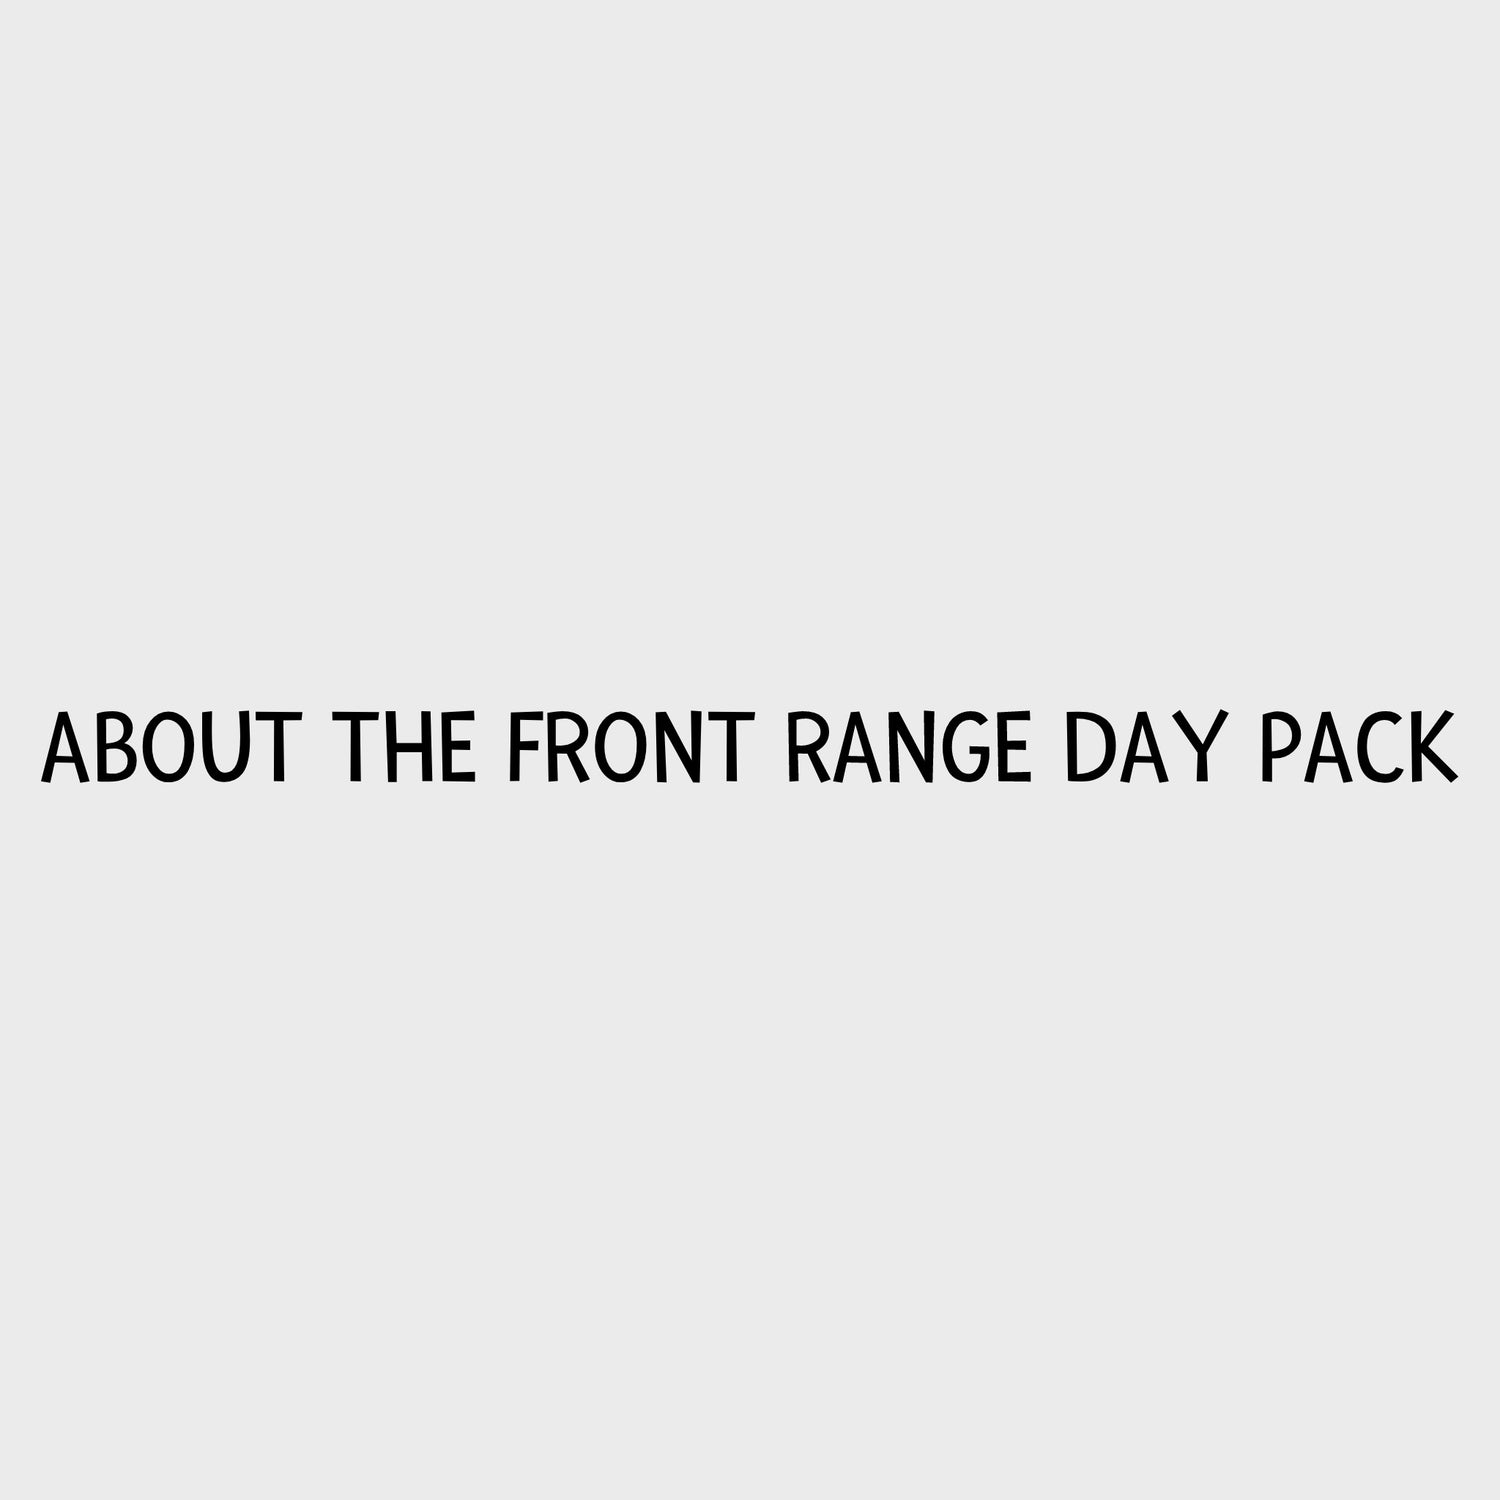 Video - Ruffwear Front Range Day Pack